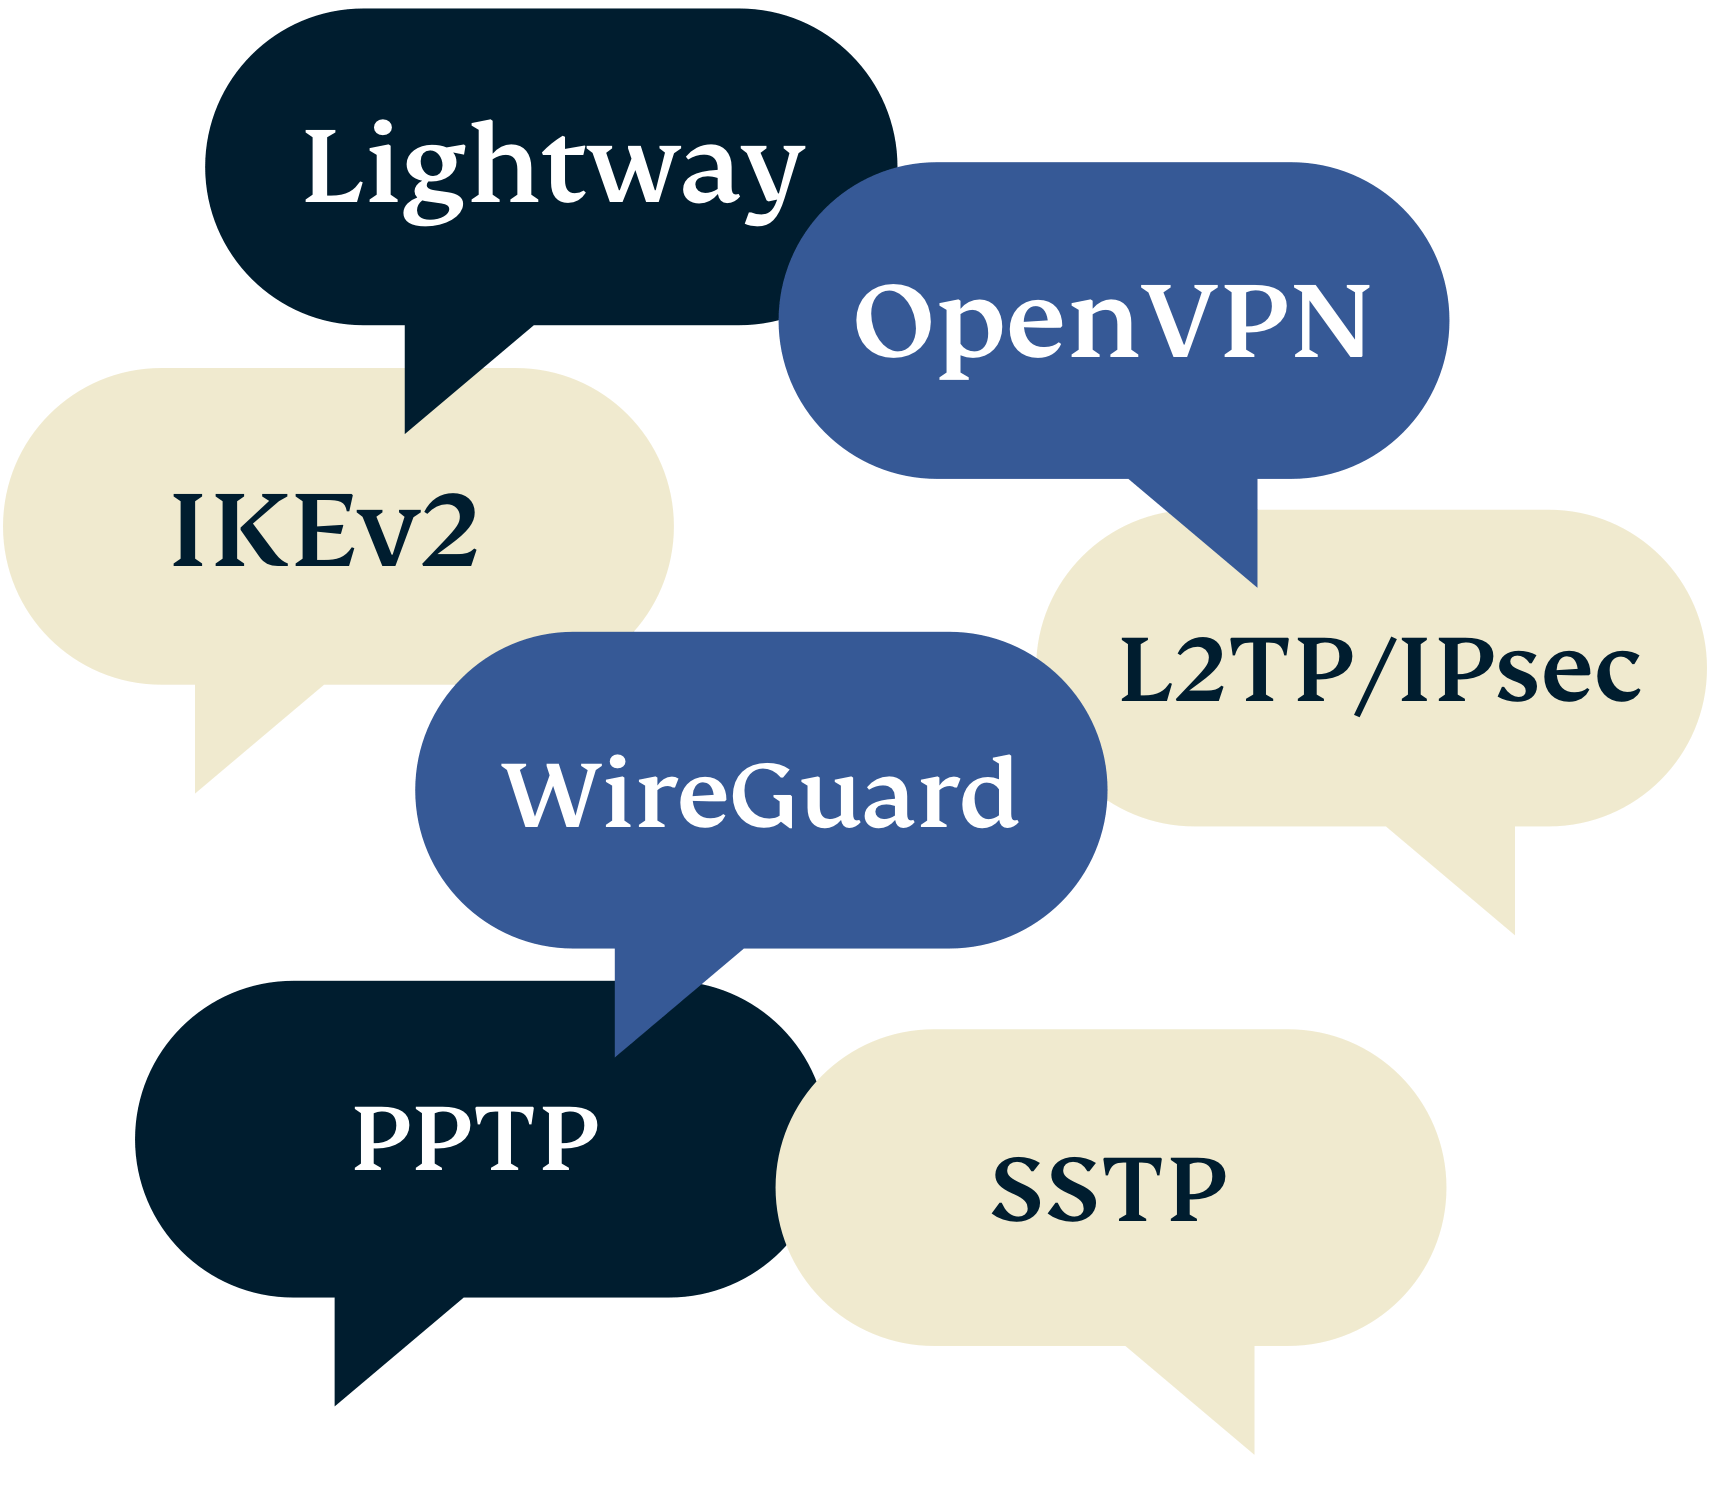 openvpn proto udp server and client